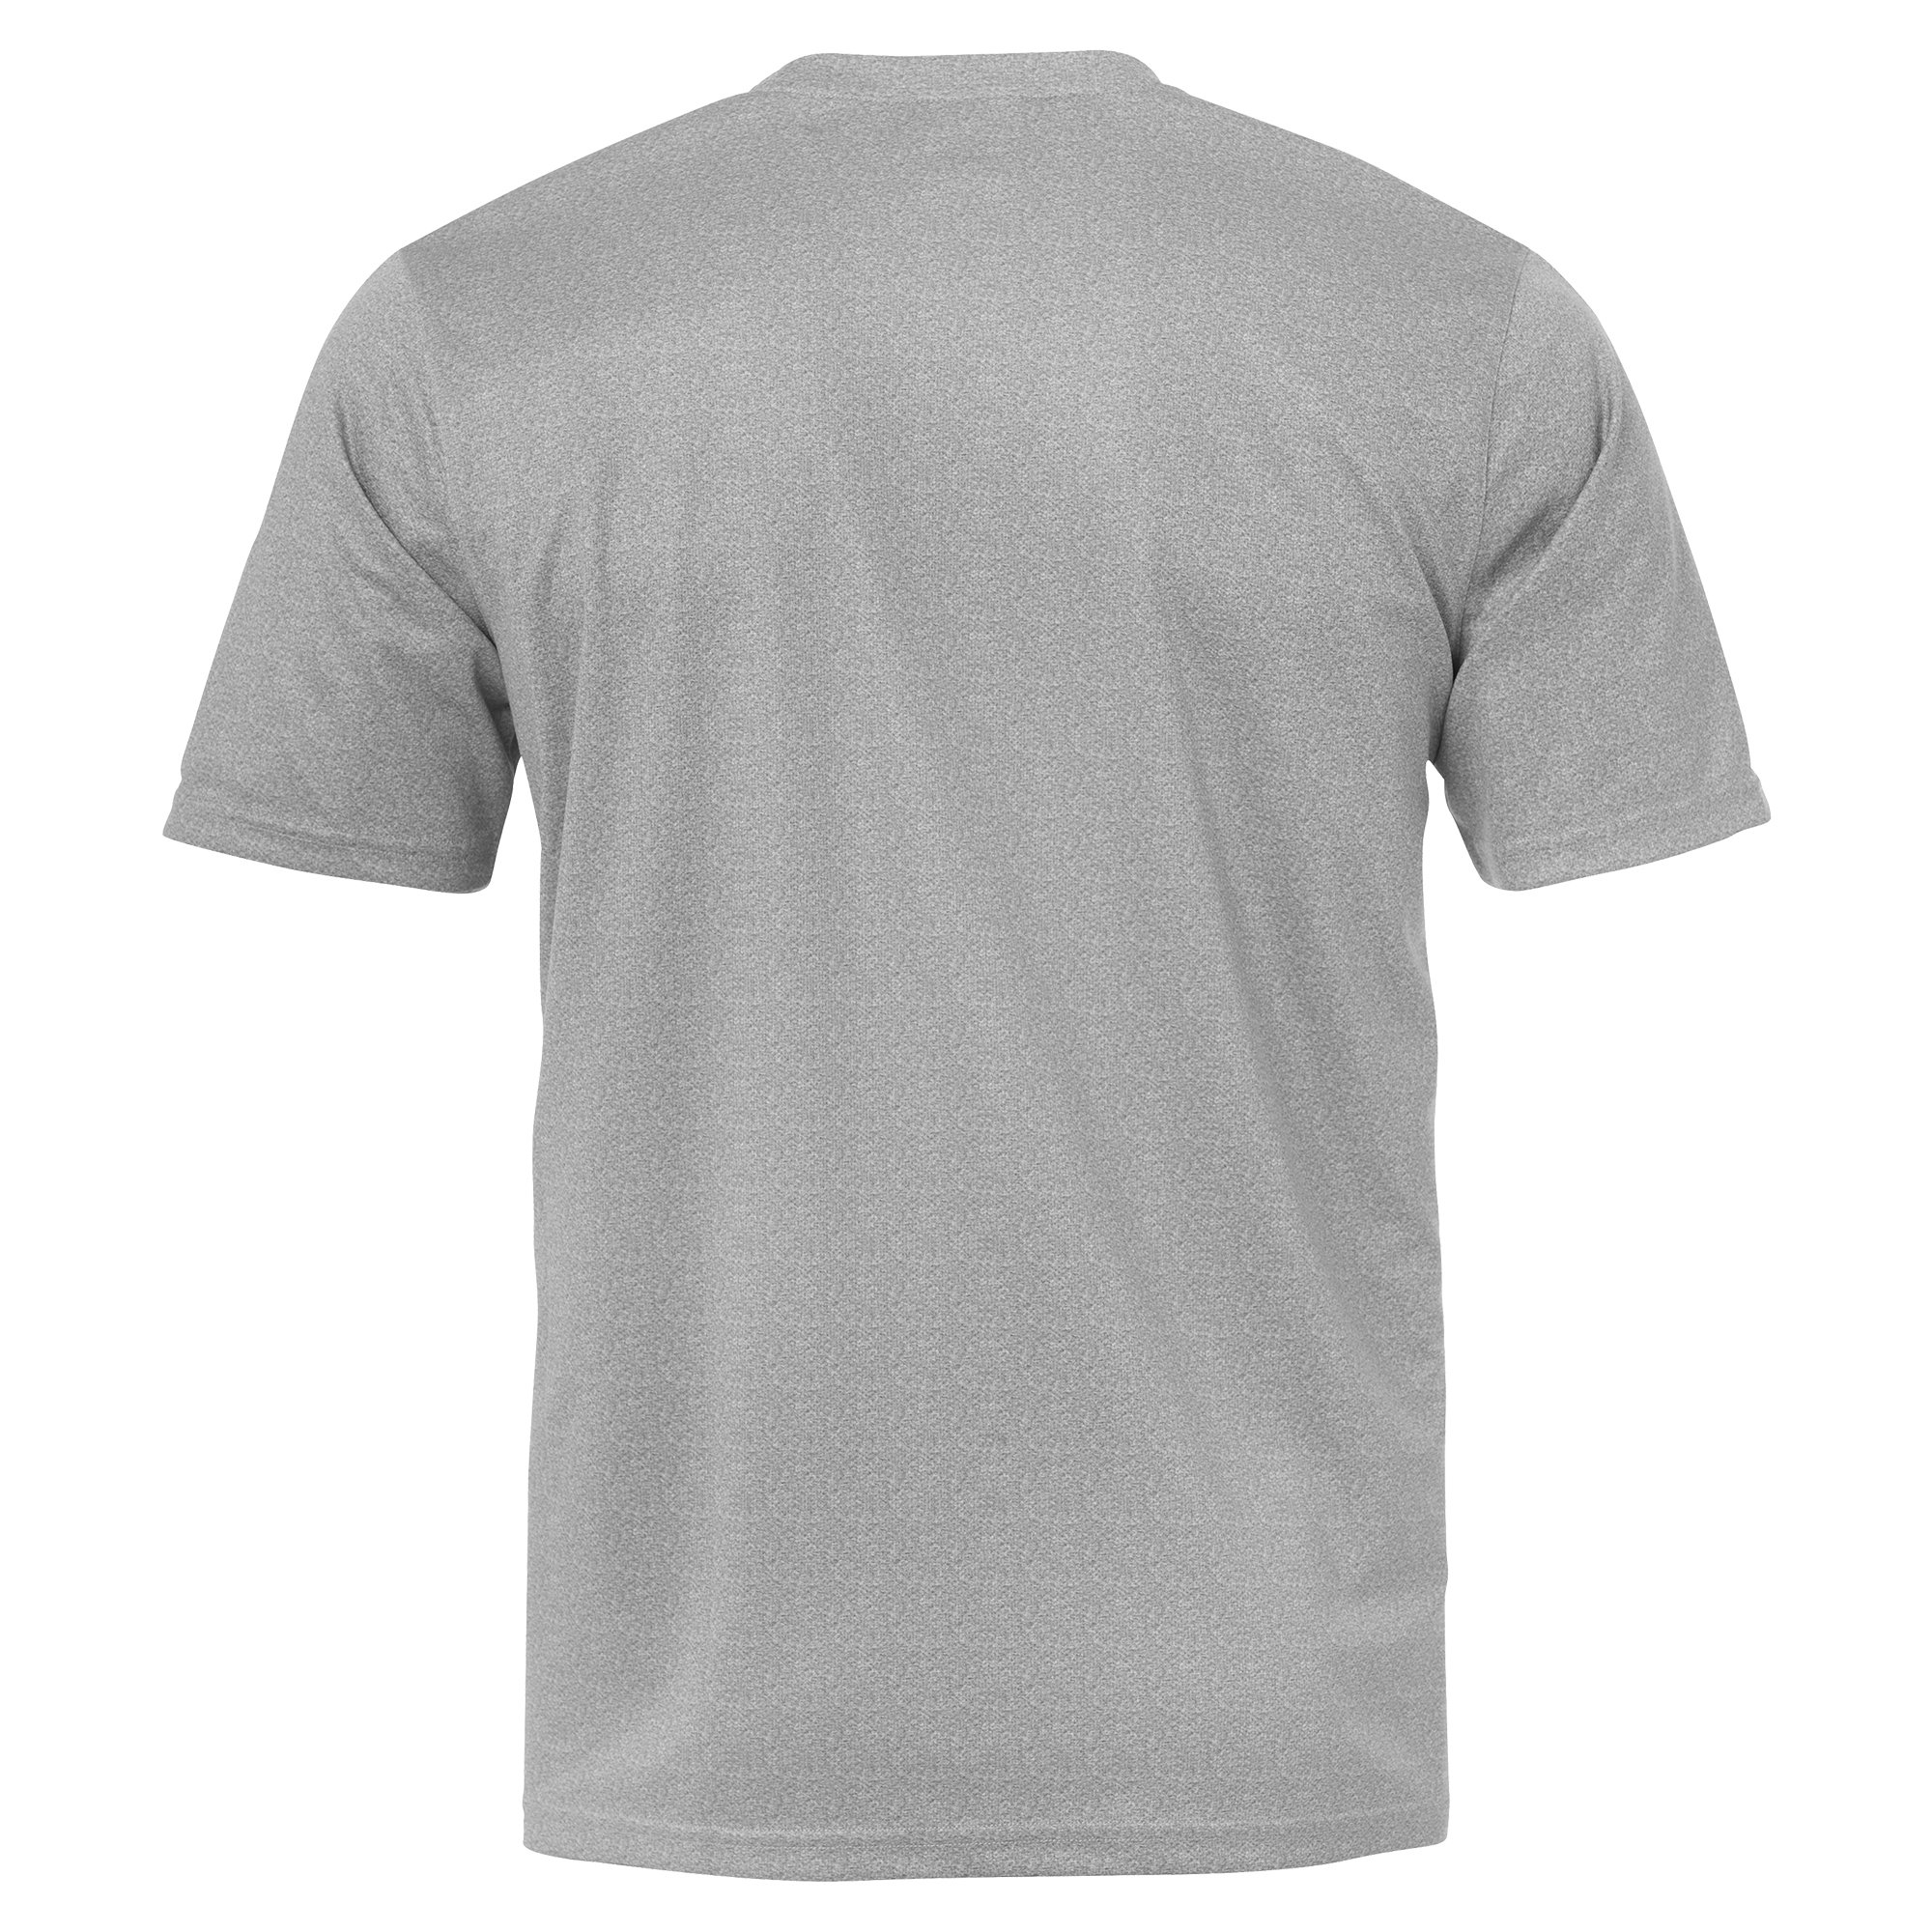 Uhlsport Goal Polyester Training T-Shirt